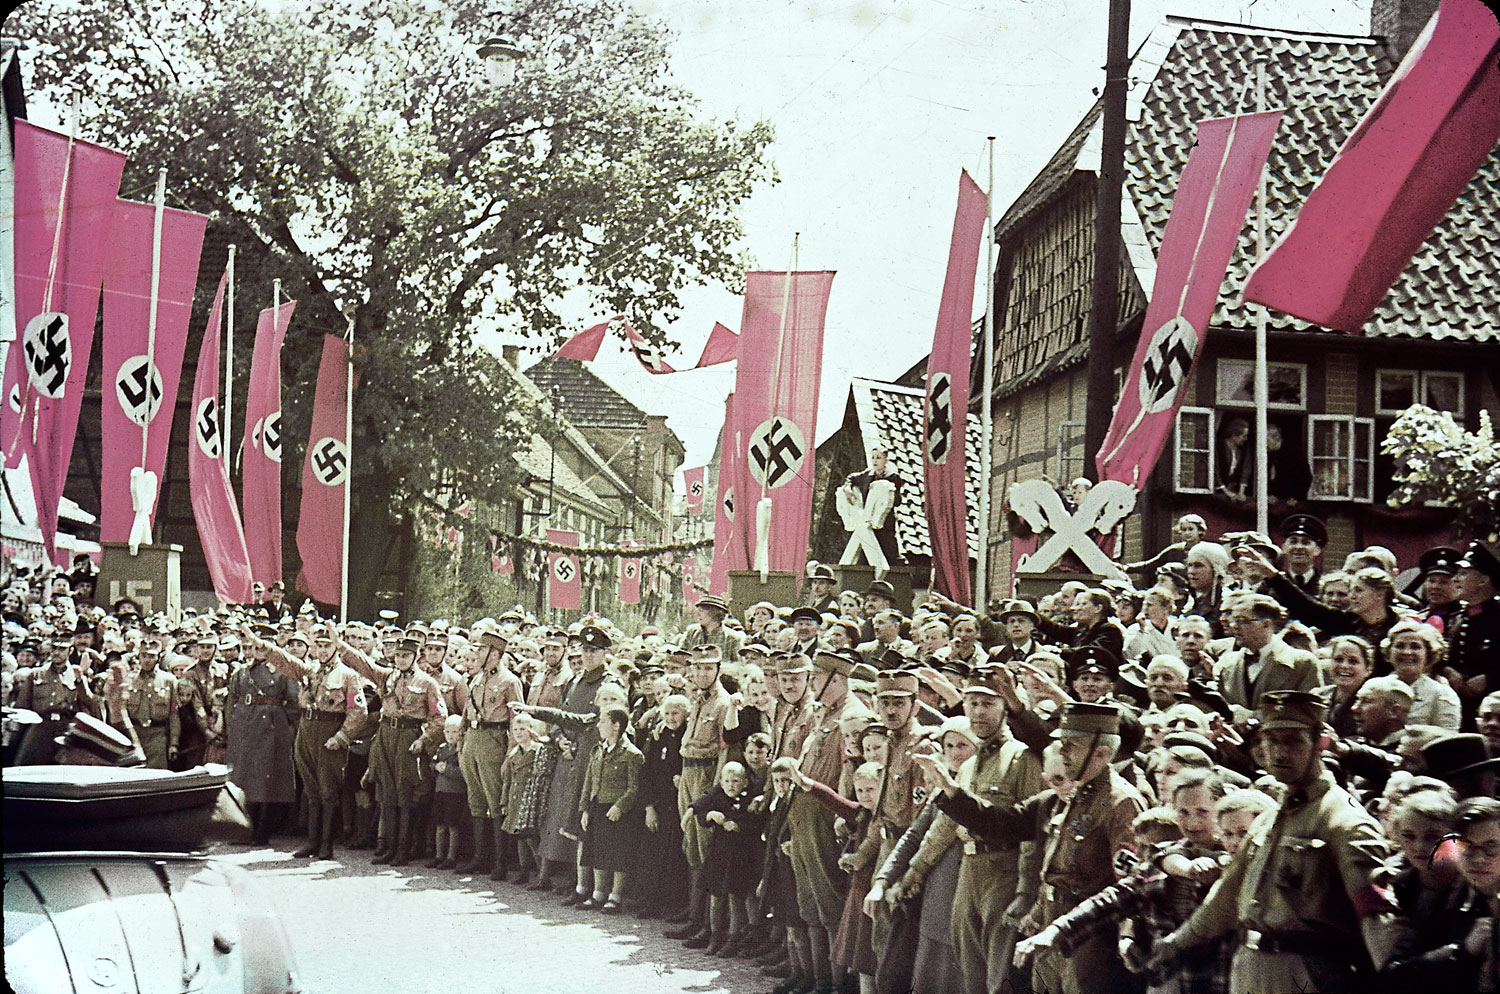 Scene along roadway to the Fallersleben Volkswagen Works cornerstone ceremony, Germany, 1938.